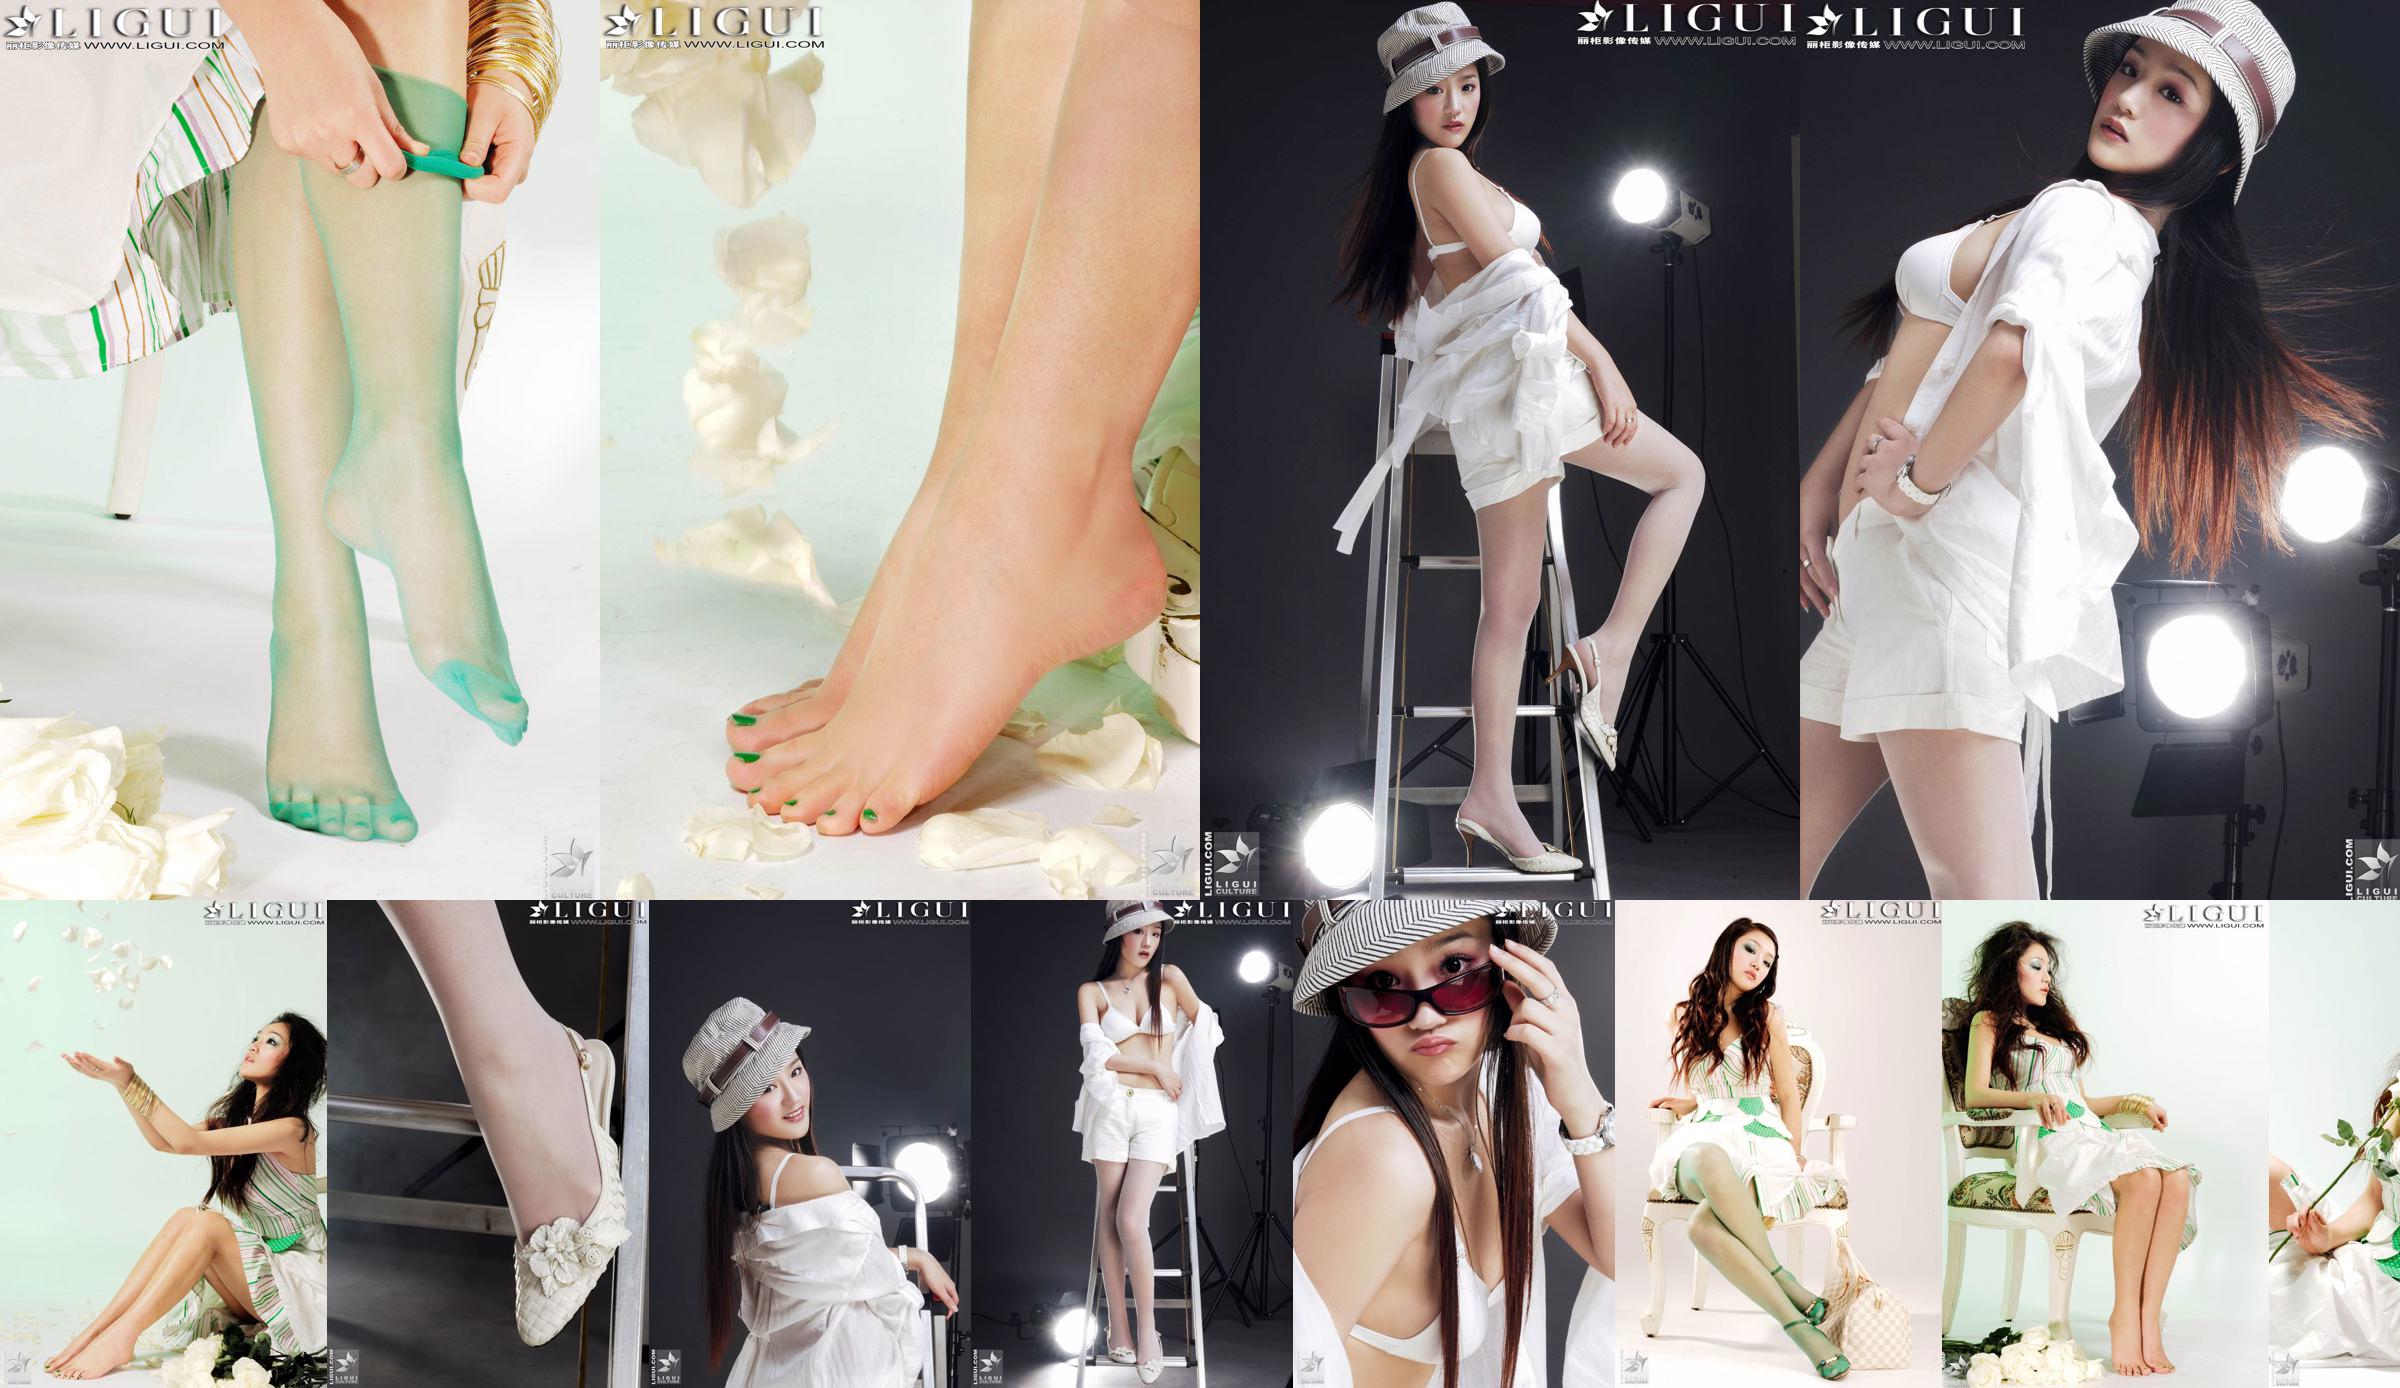 [丽 柜 贵 pé LiGui] Foto "Fashionable Foot" do modelo Zhang Jingyan de belas pernas e pés de seda No.45cbd8 Página 13